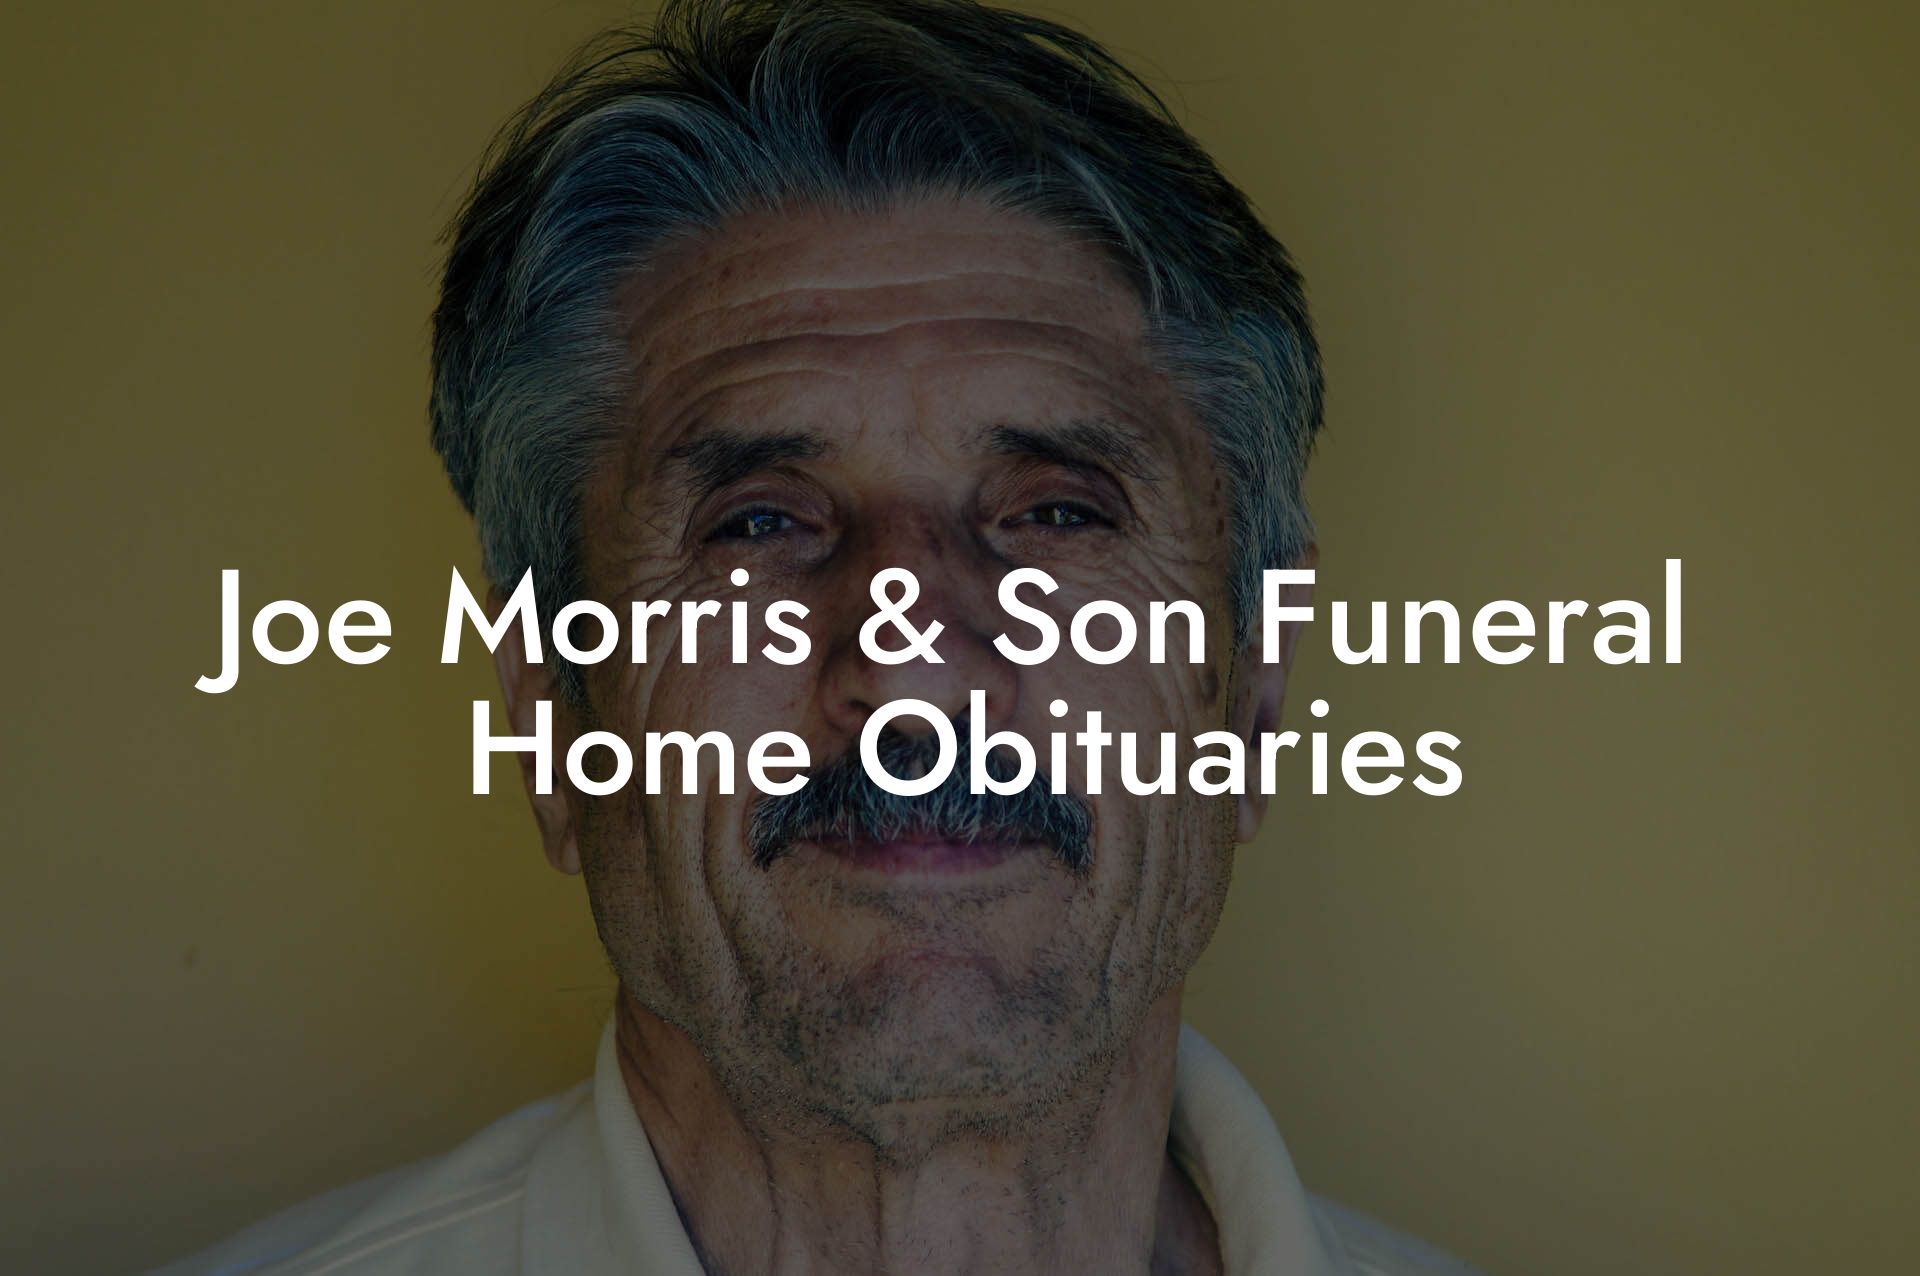 Joe Morris & Son Funeral Home Obituaries